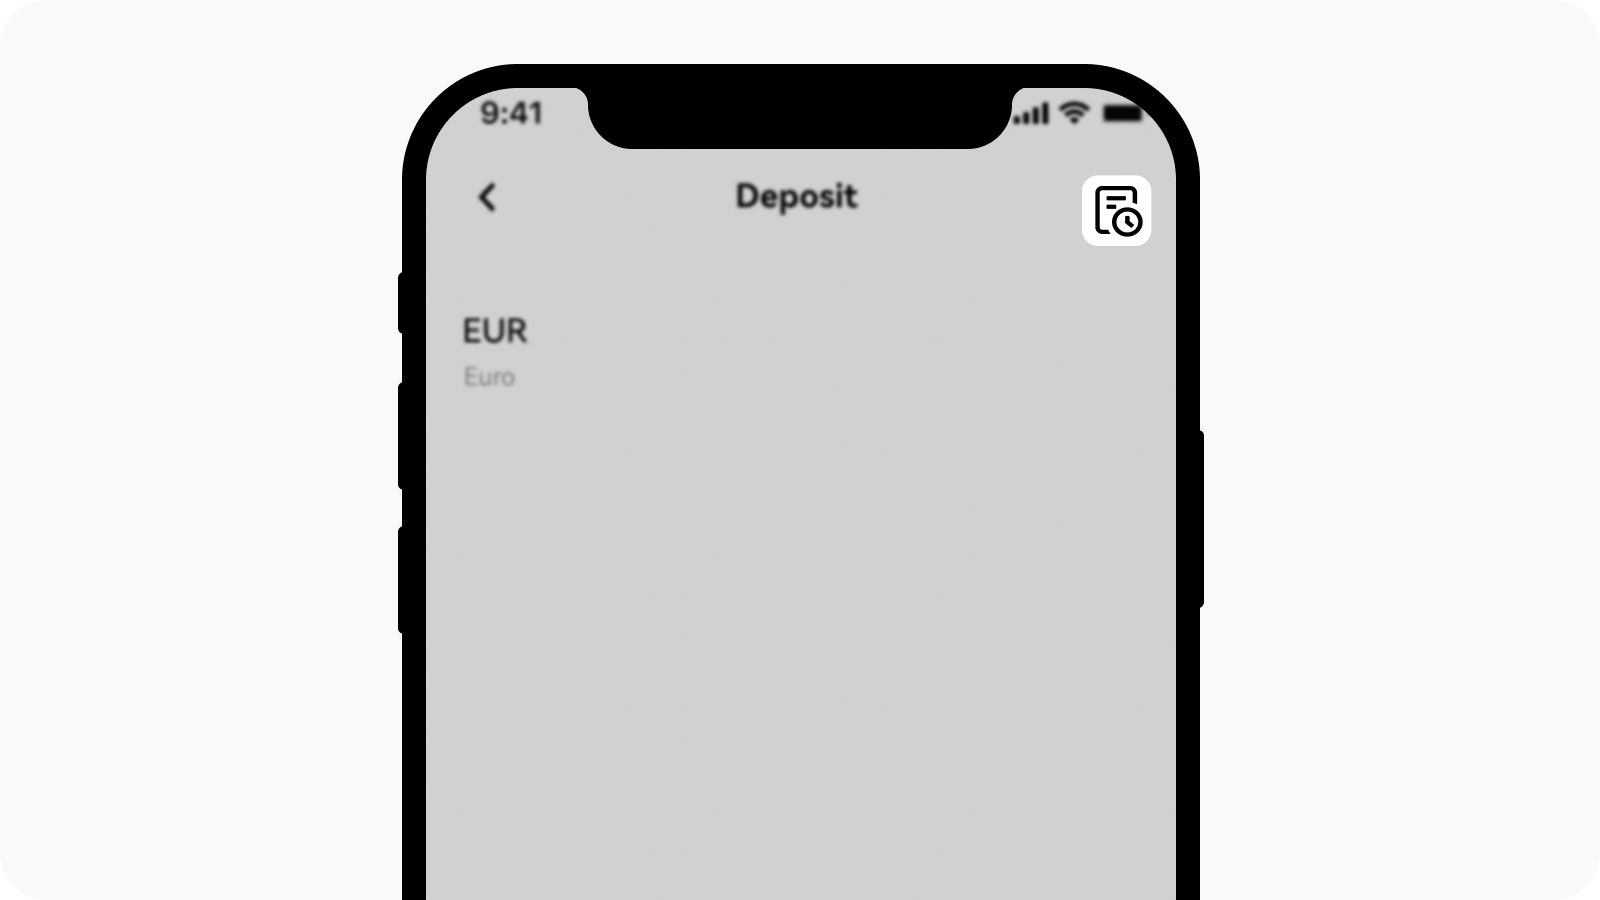 CT-app-cash deposit-EUR deposit history